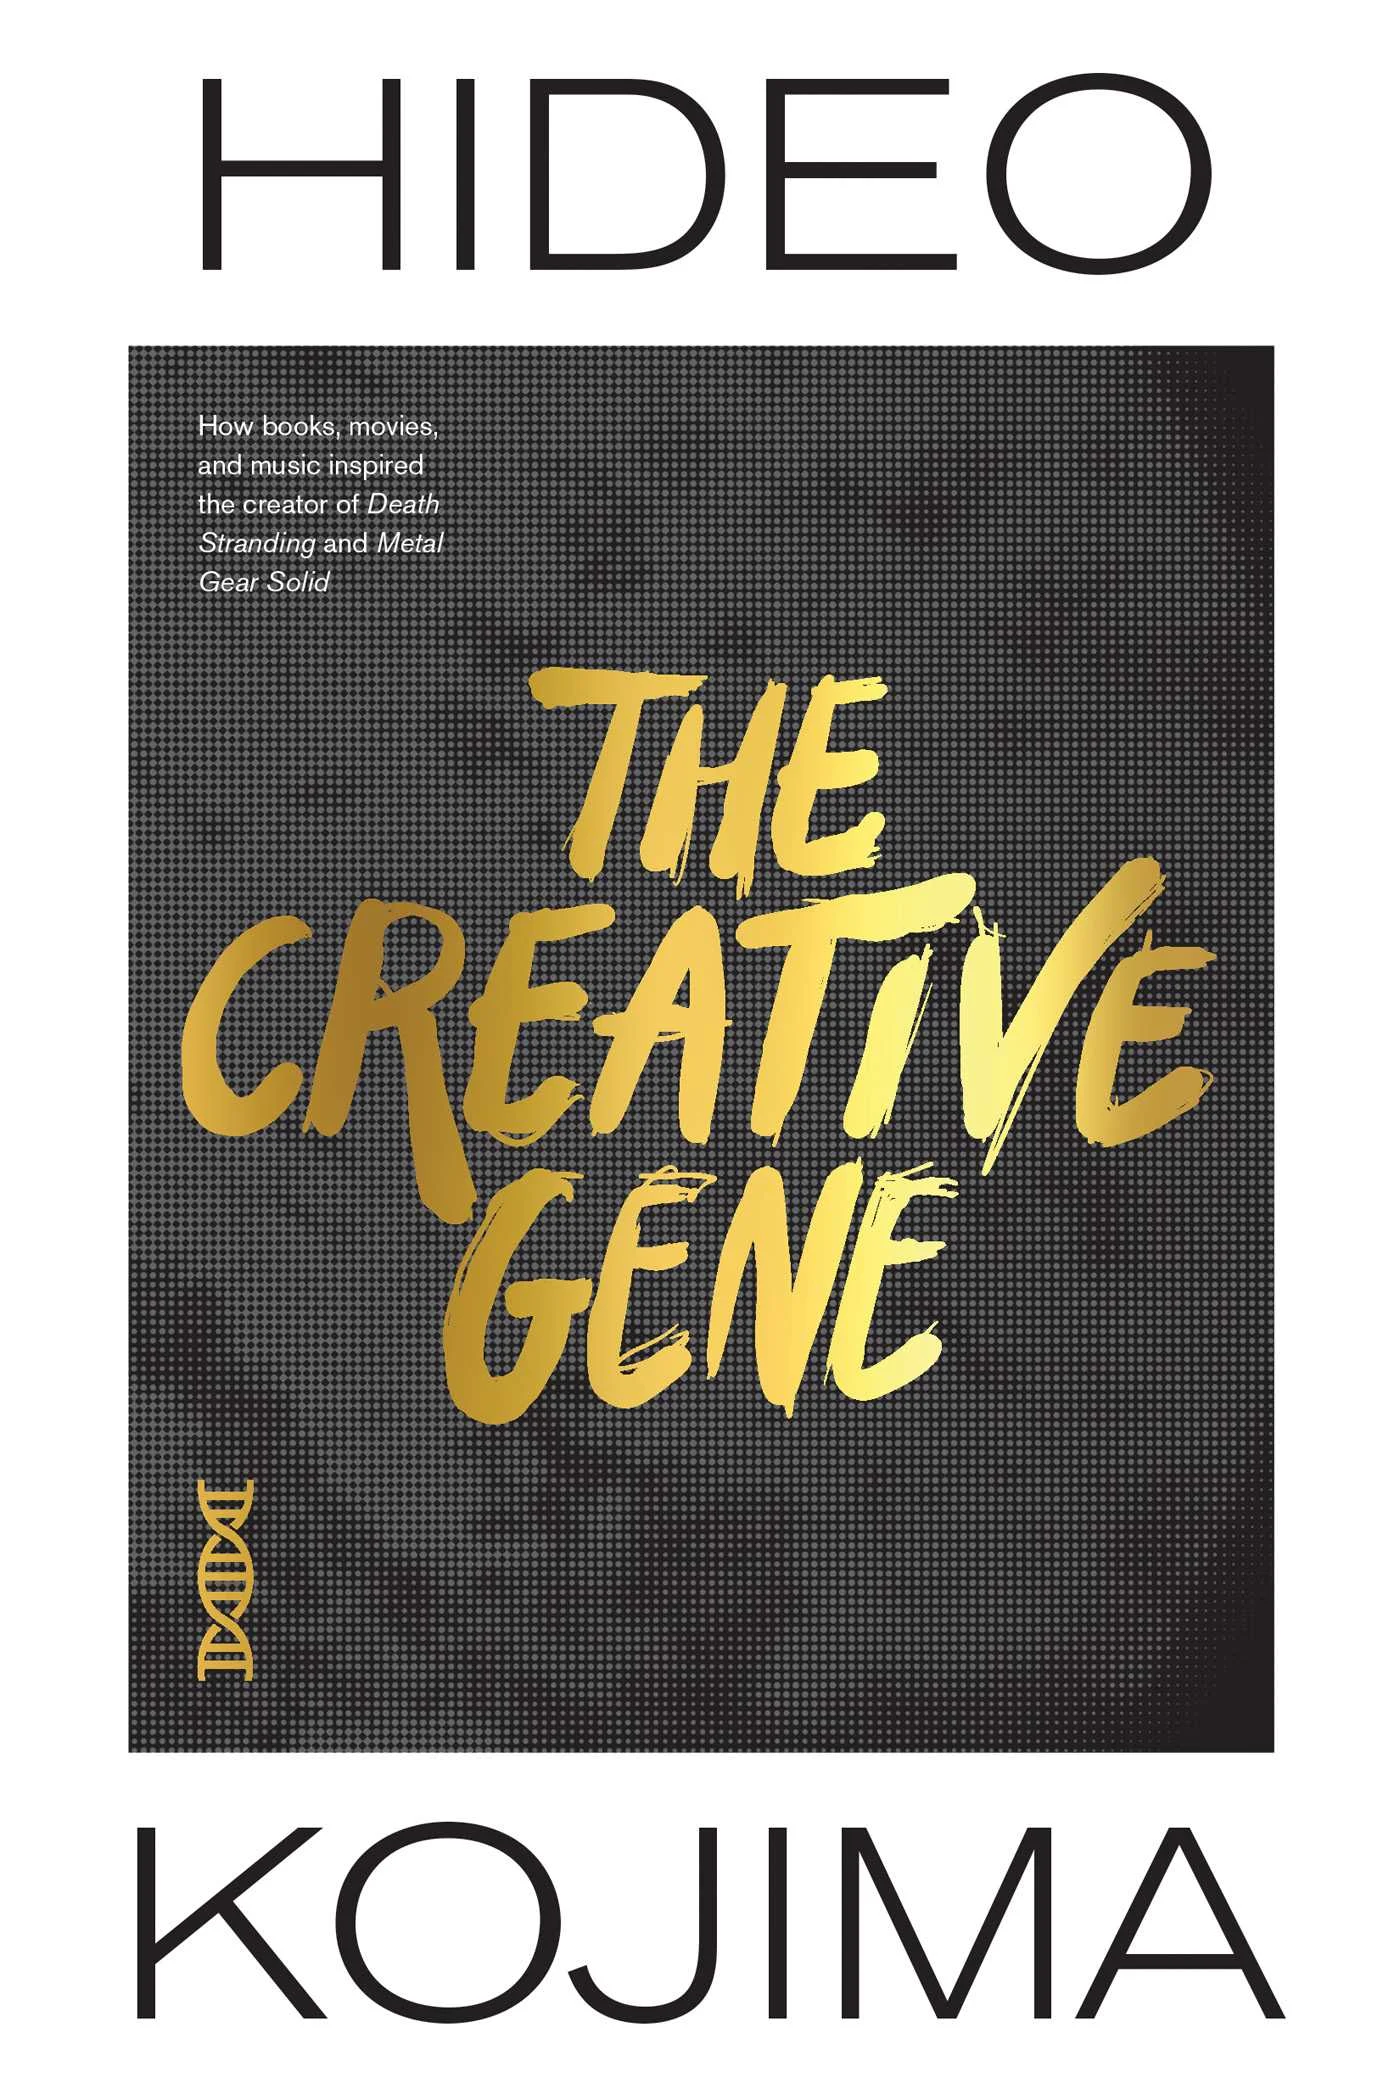 The creative gene of Hideo Kojima